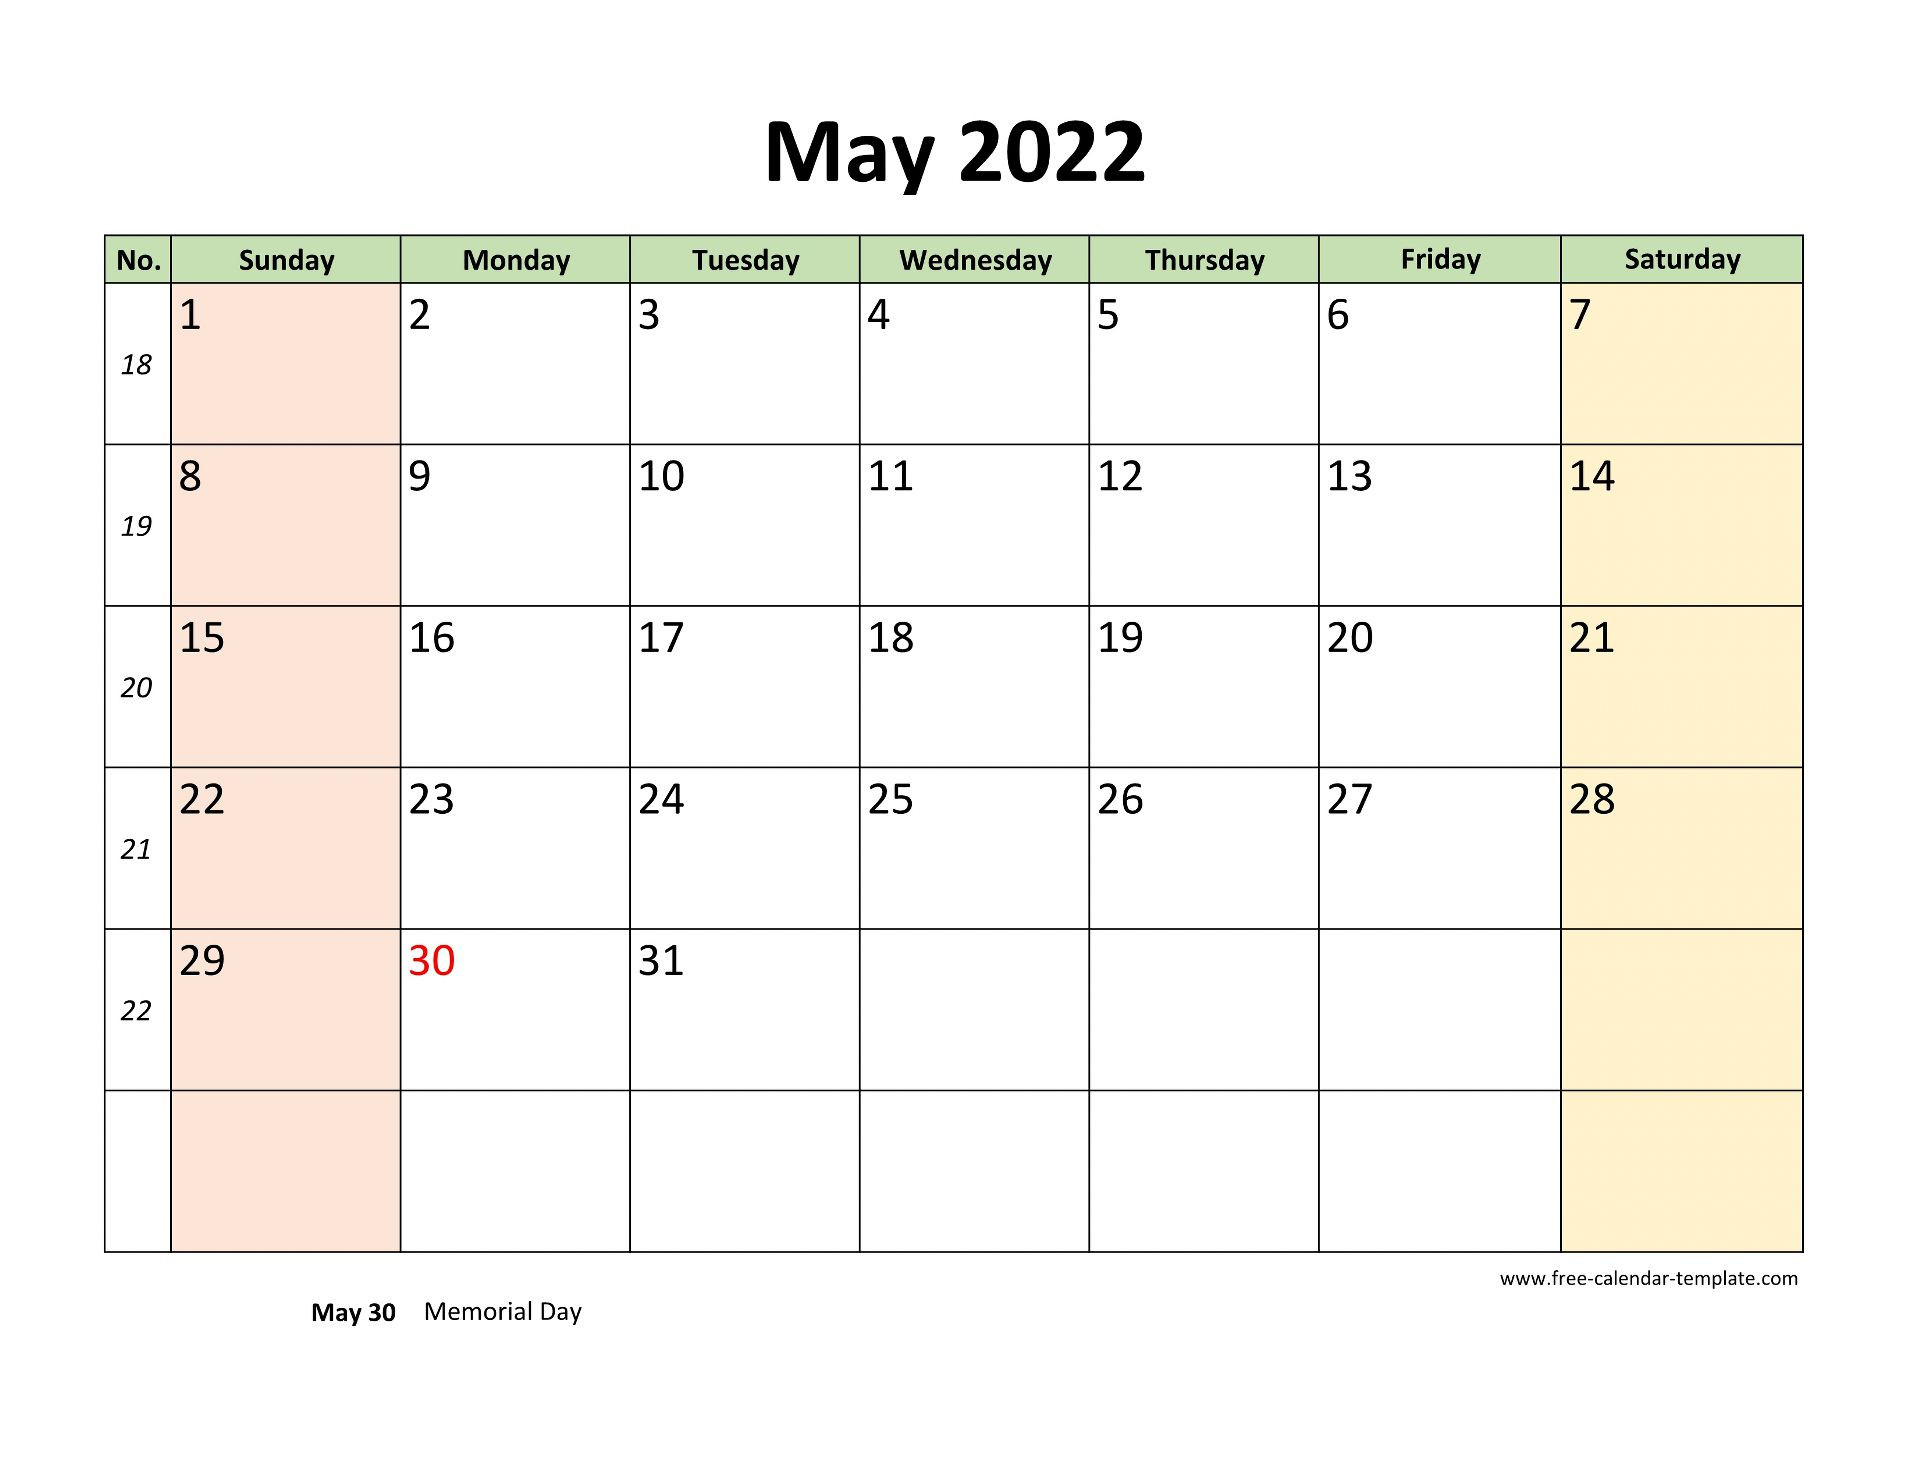 May 2022 Free Calendar Tempplate | Free-Calendar-Template  May Free Printable Calendar 2022